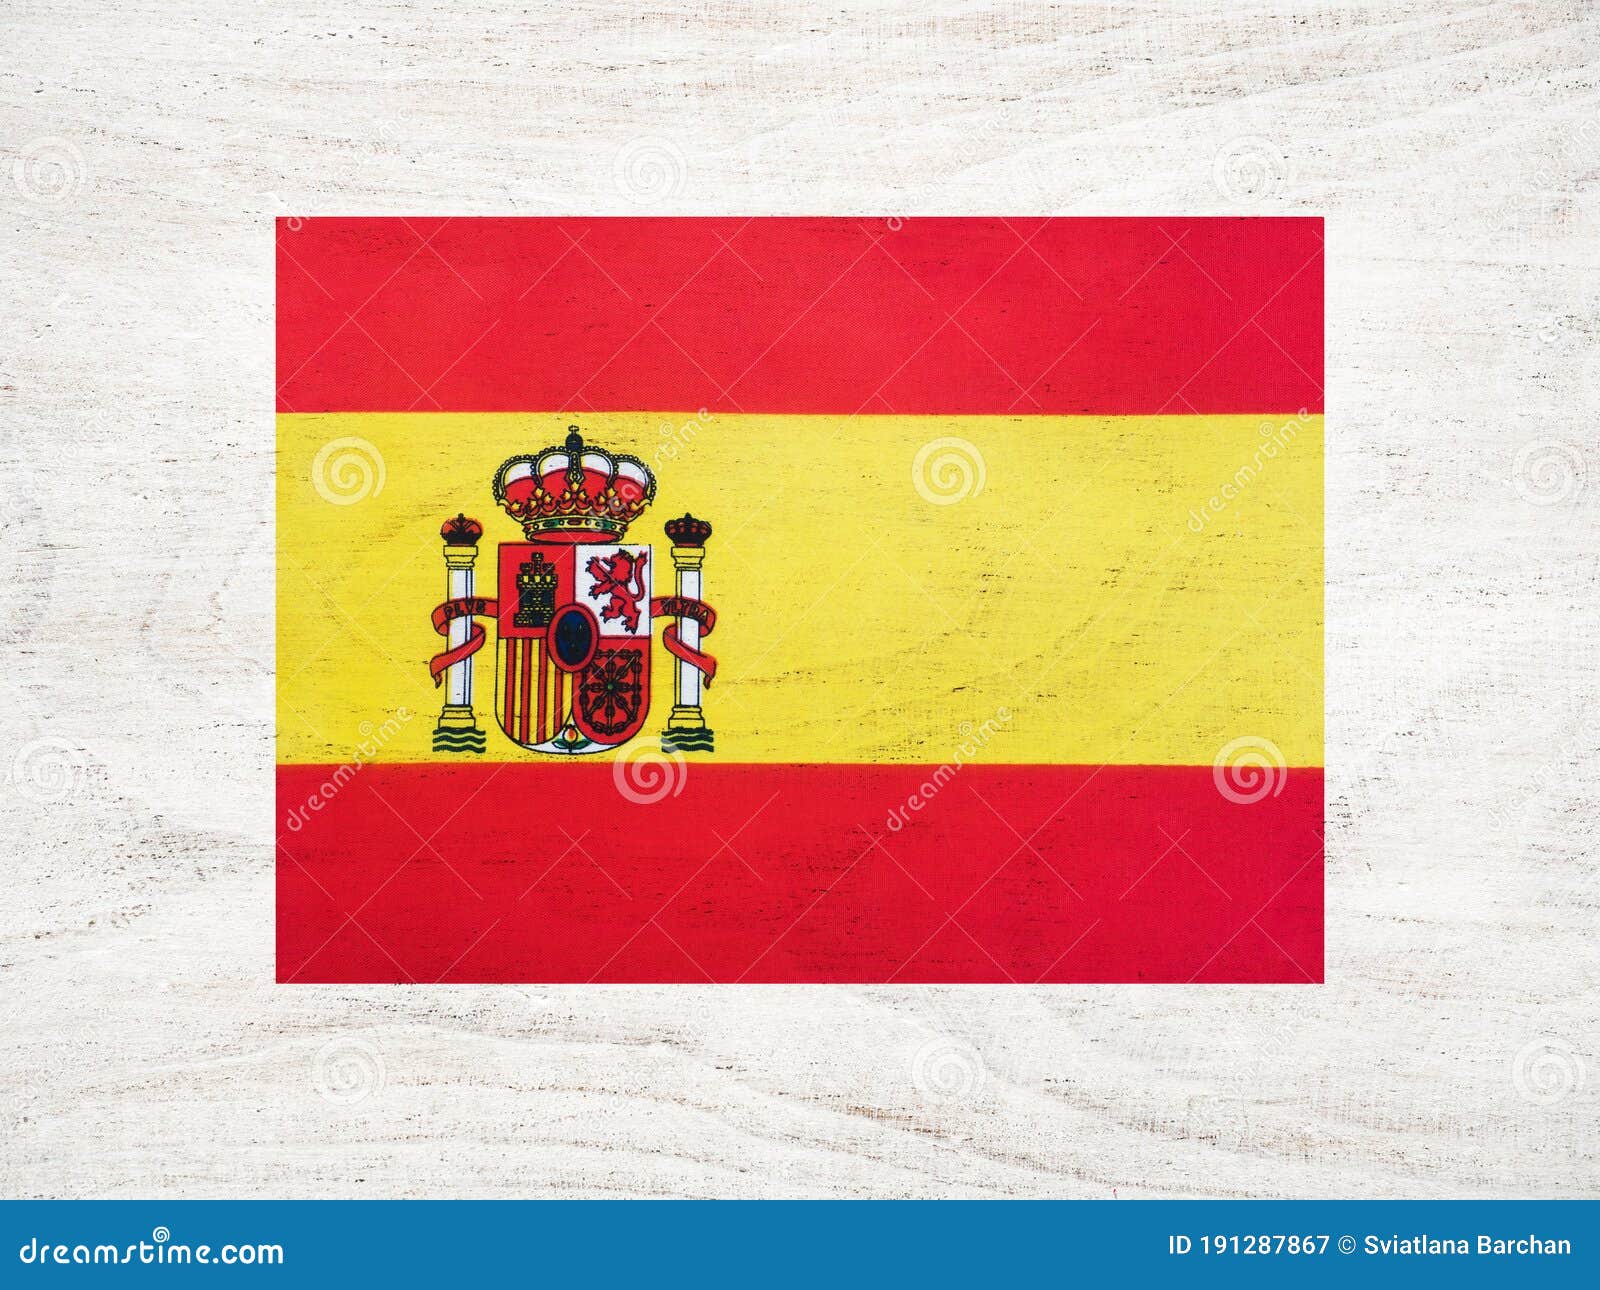 193,452 Bandera España Royalty-Free Images, Stock Photos & Pictures